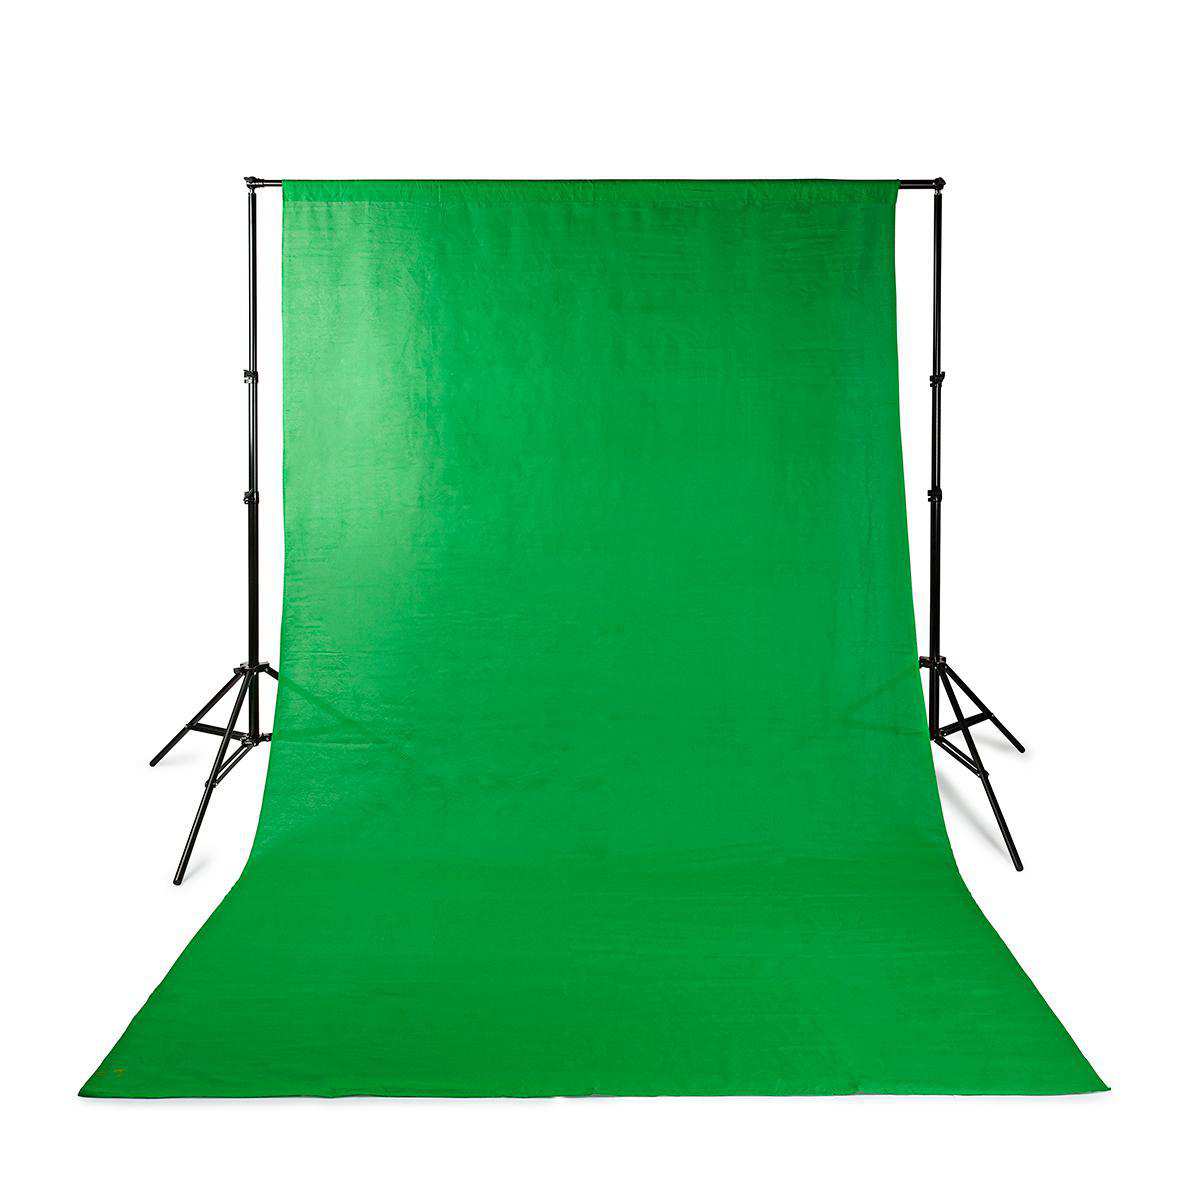 Photo Studio Backdrop Set Tripods Green 3 meter Nedis